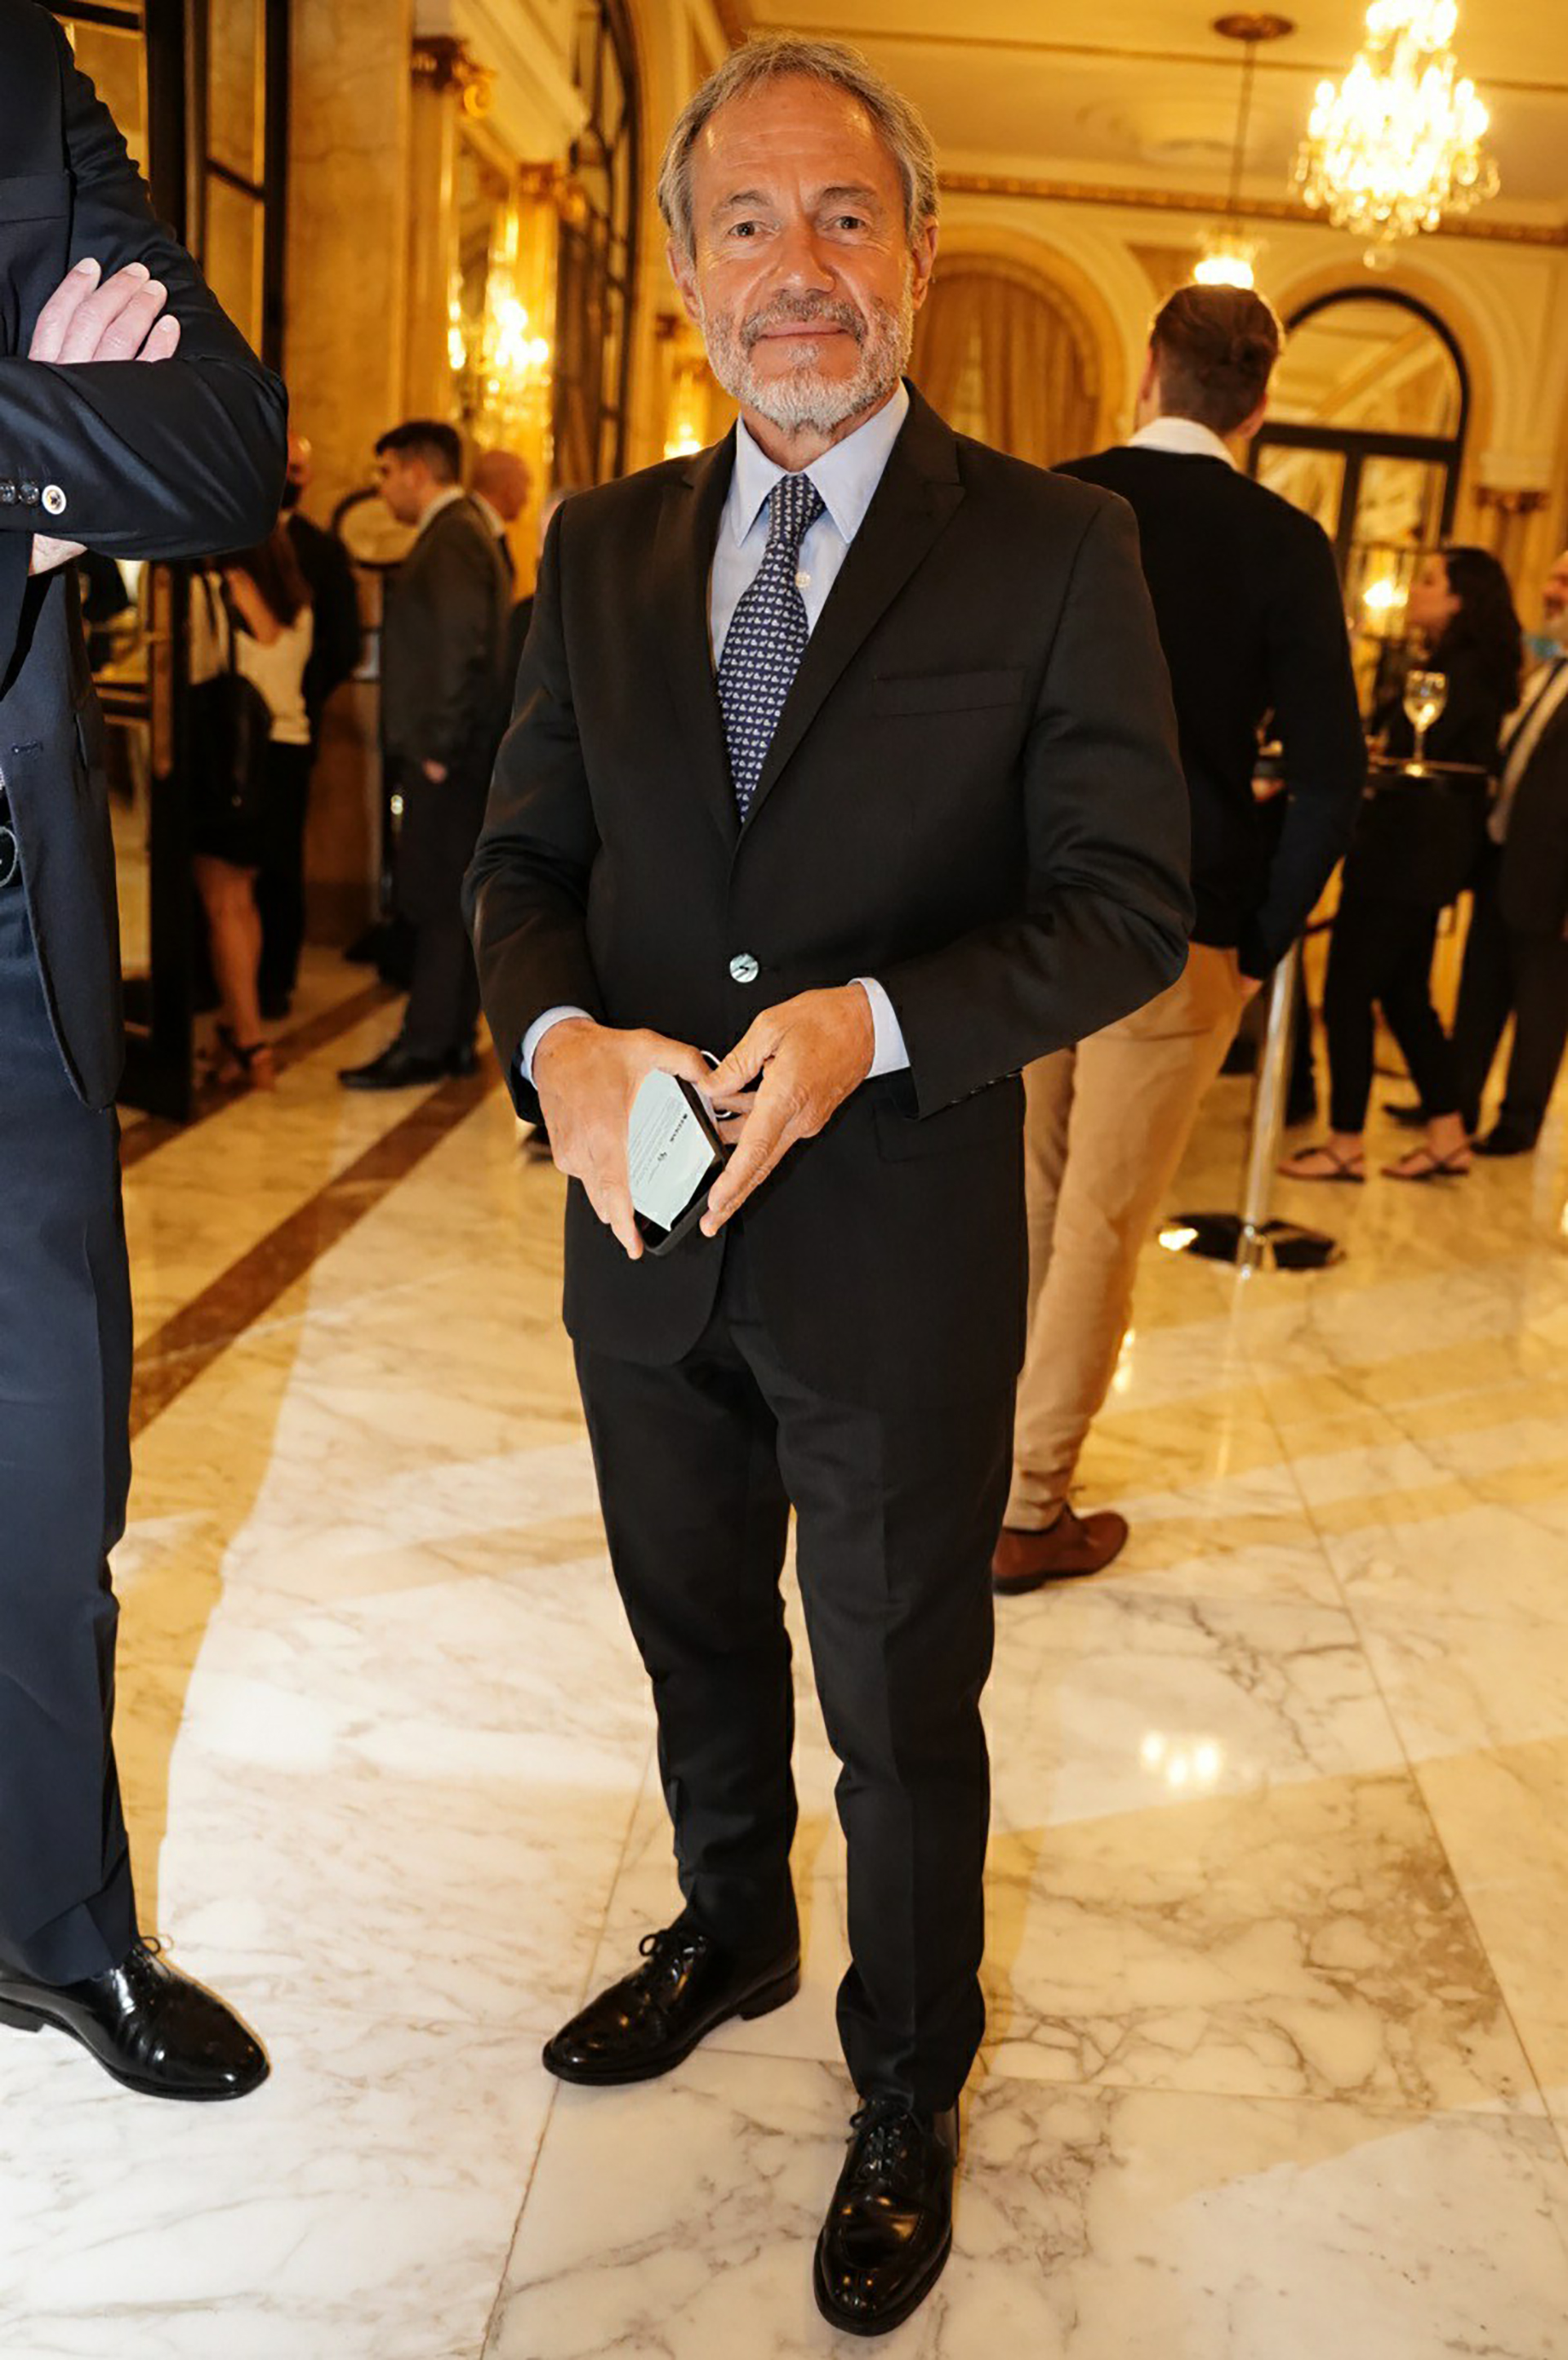 El ex ministro de Justicia de la provincia de Buenos Aires, Gustavo Ferrari


